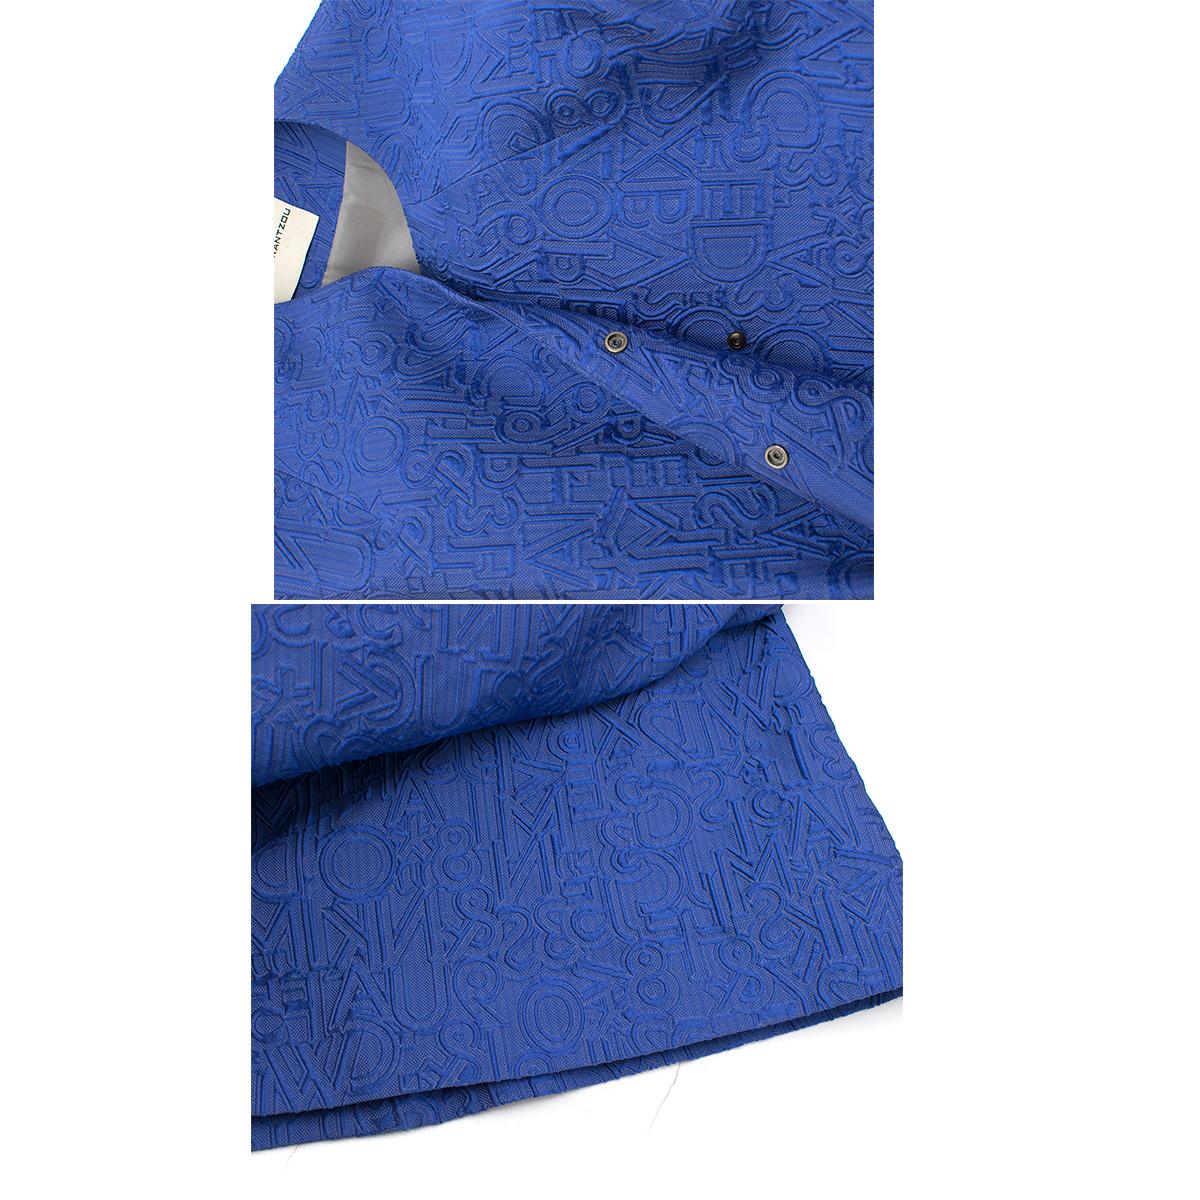 Mary Katrantzou Blue Brocade Twill Coat estimated size S-M For Sale 5